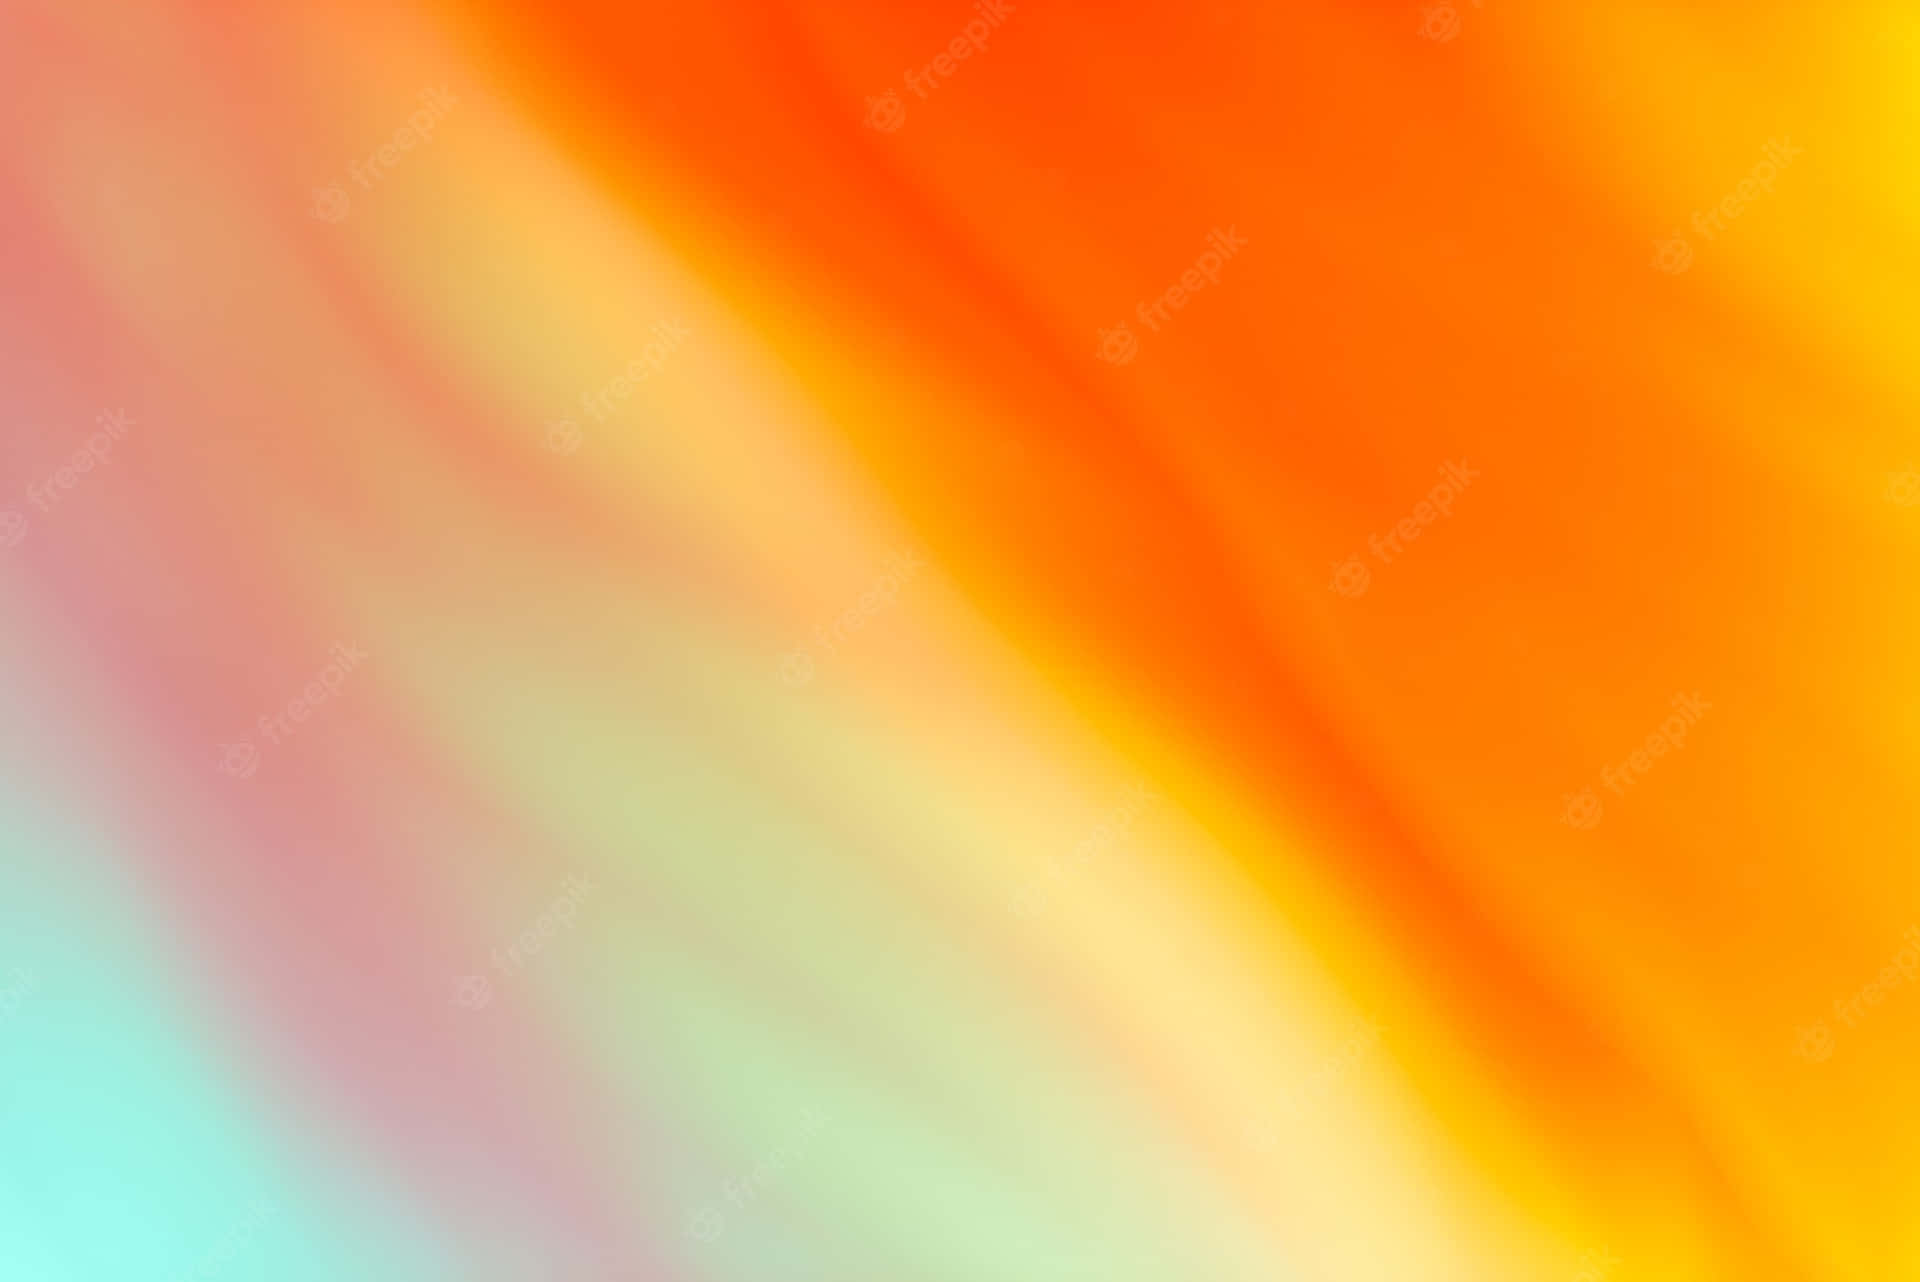 "A vibrant burst of light orange illuminates the room." Wallpaper